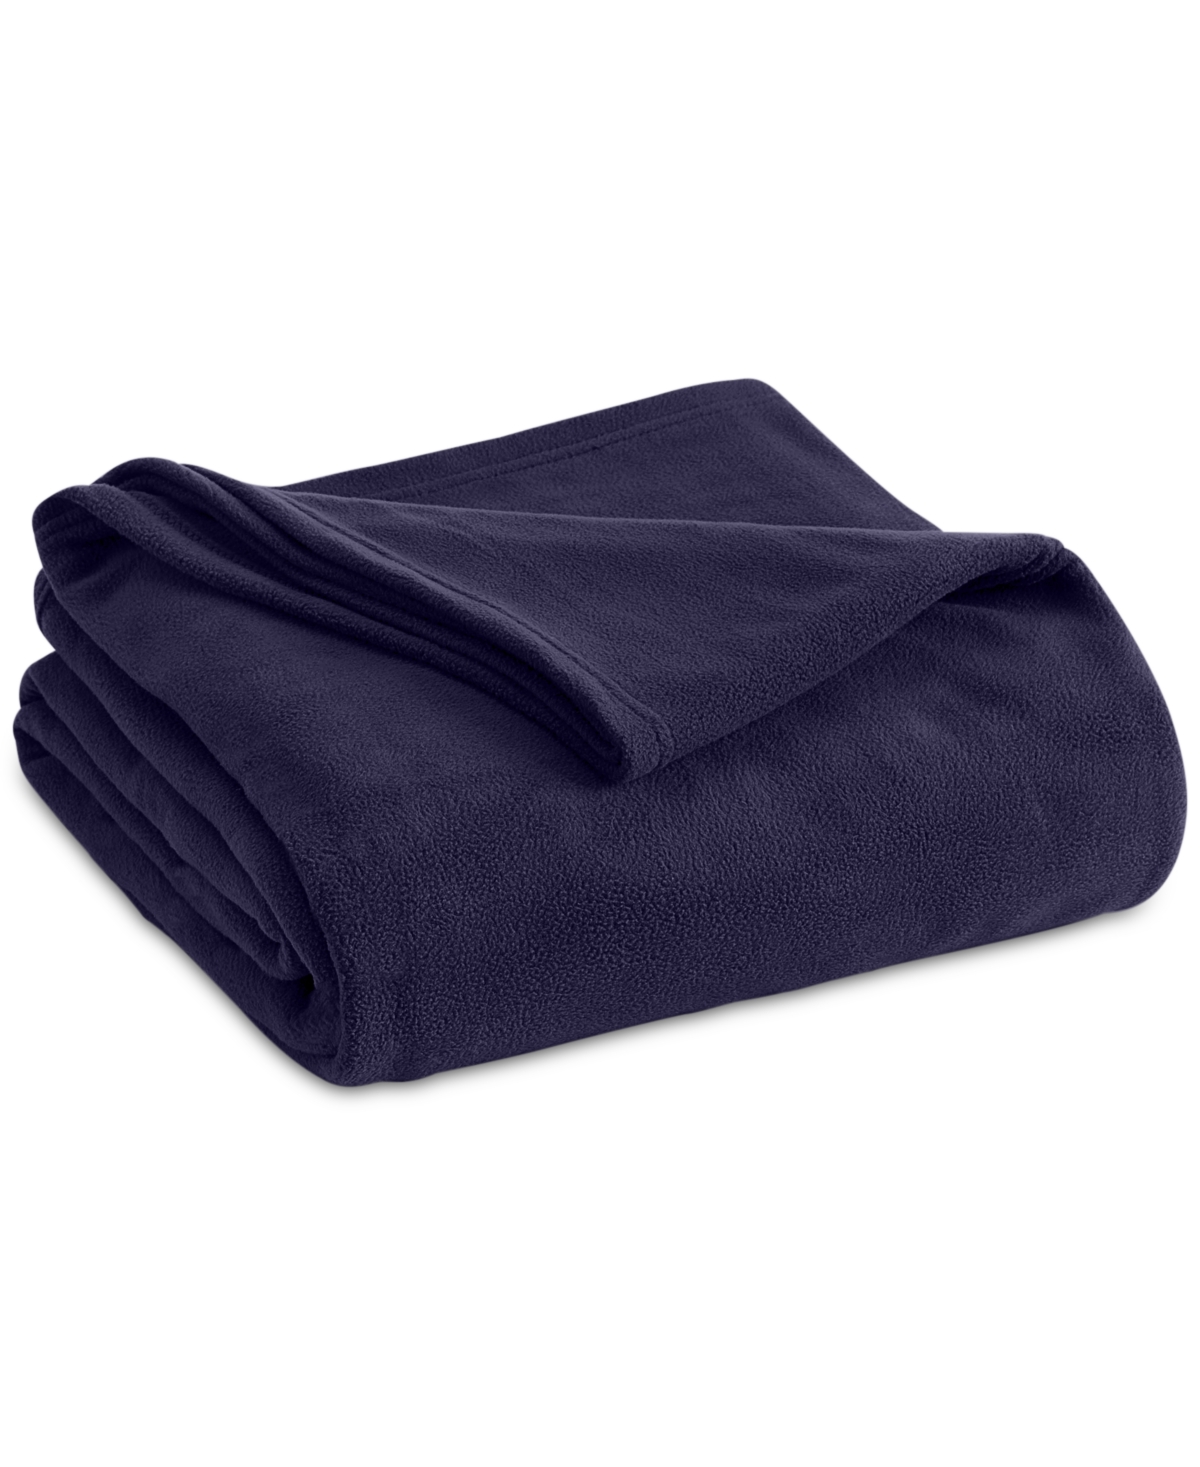 Vellux Brushed Microfleece King Blanket Bedding In Navy